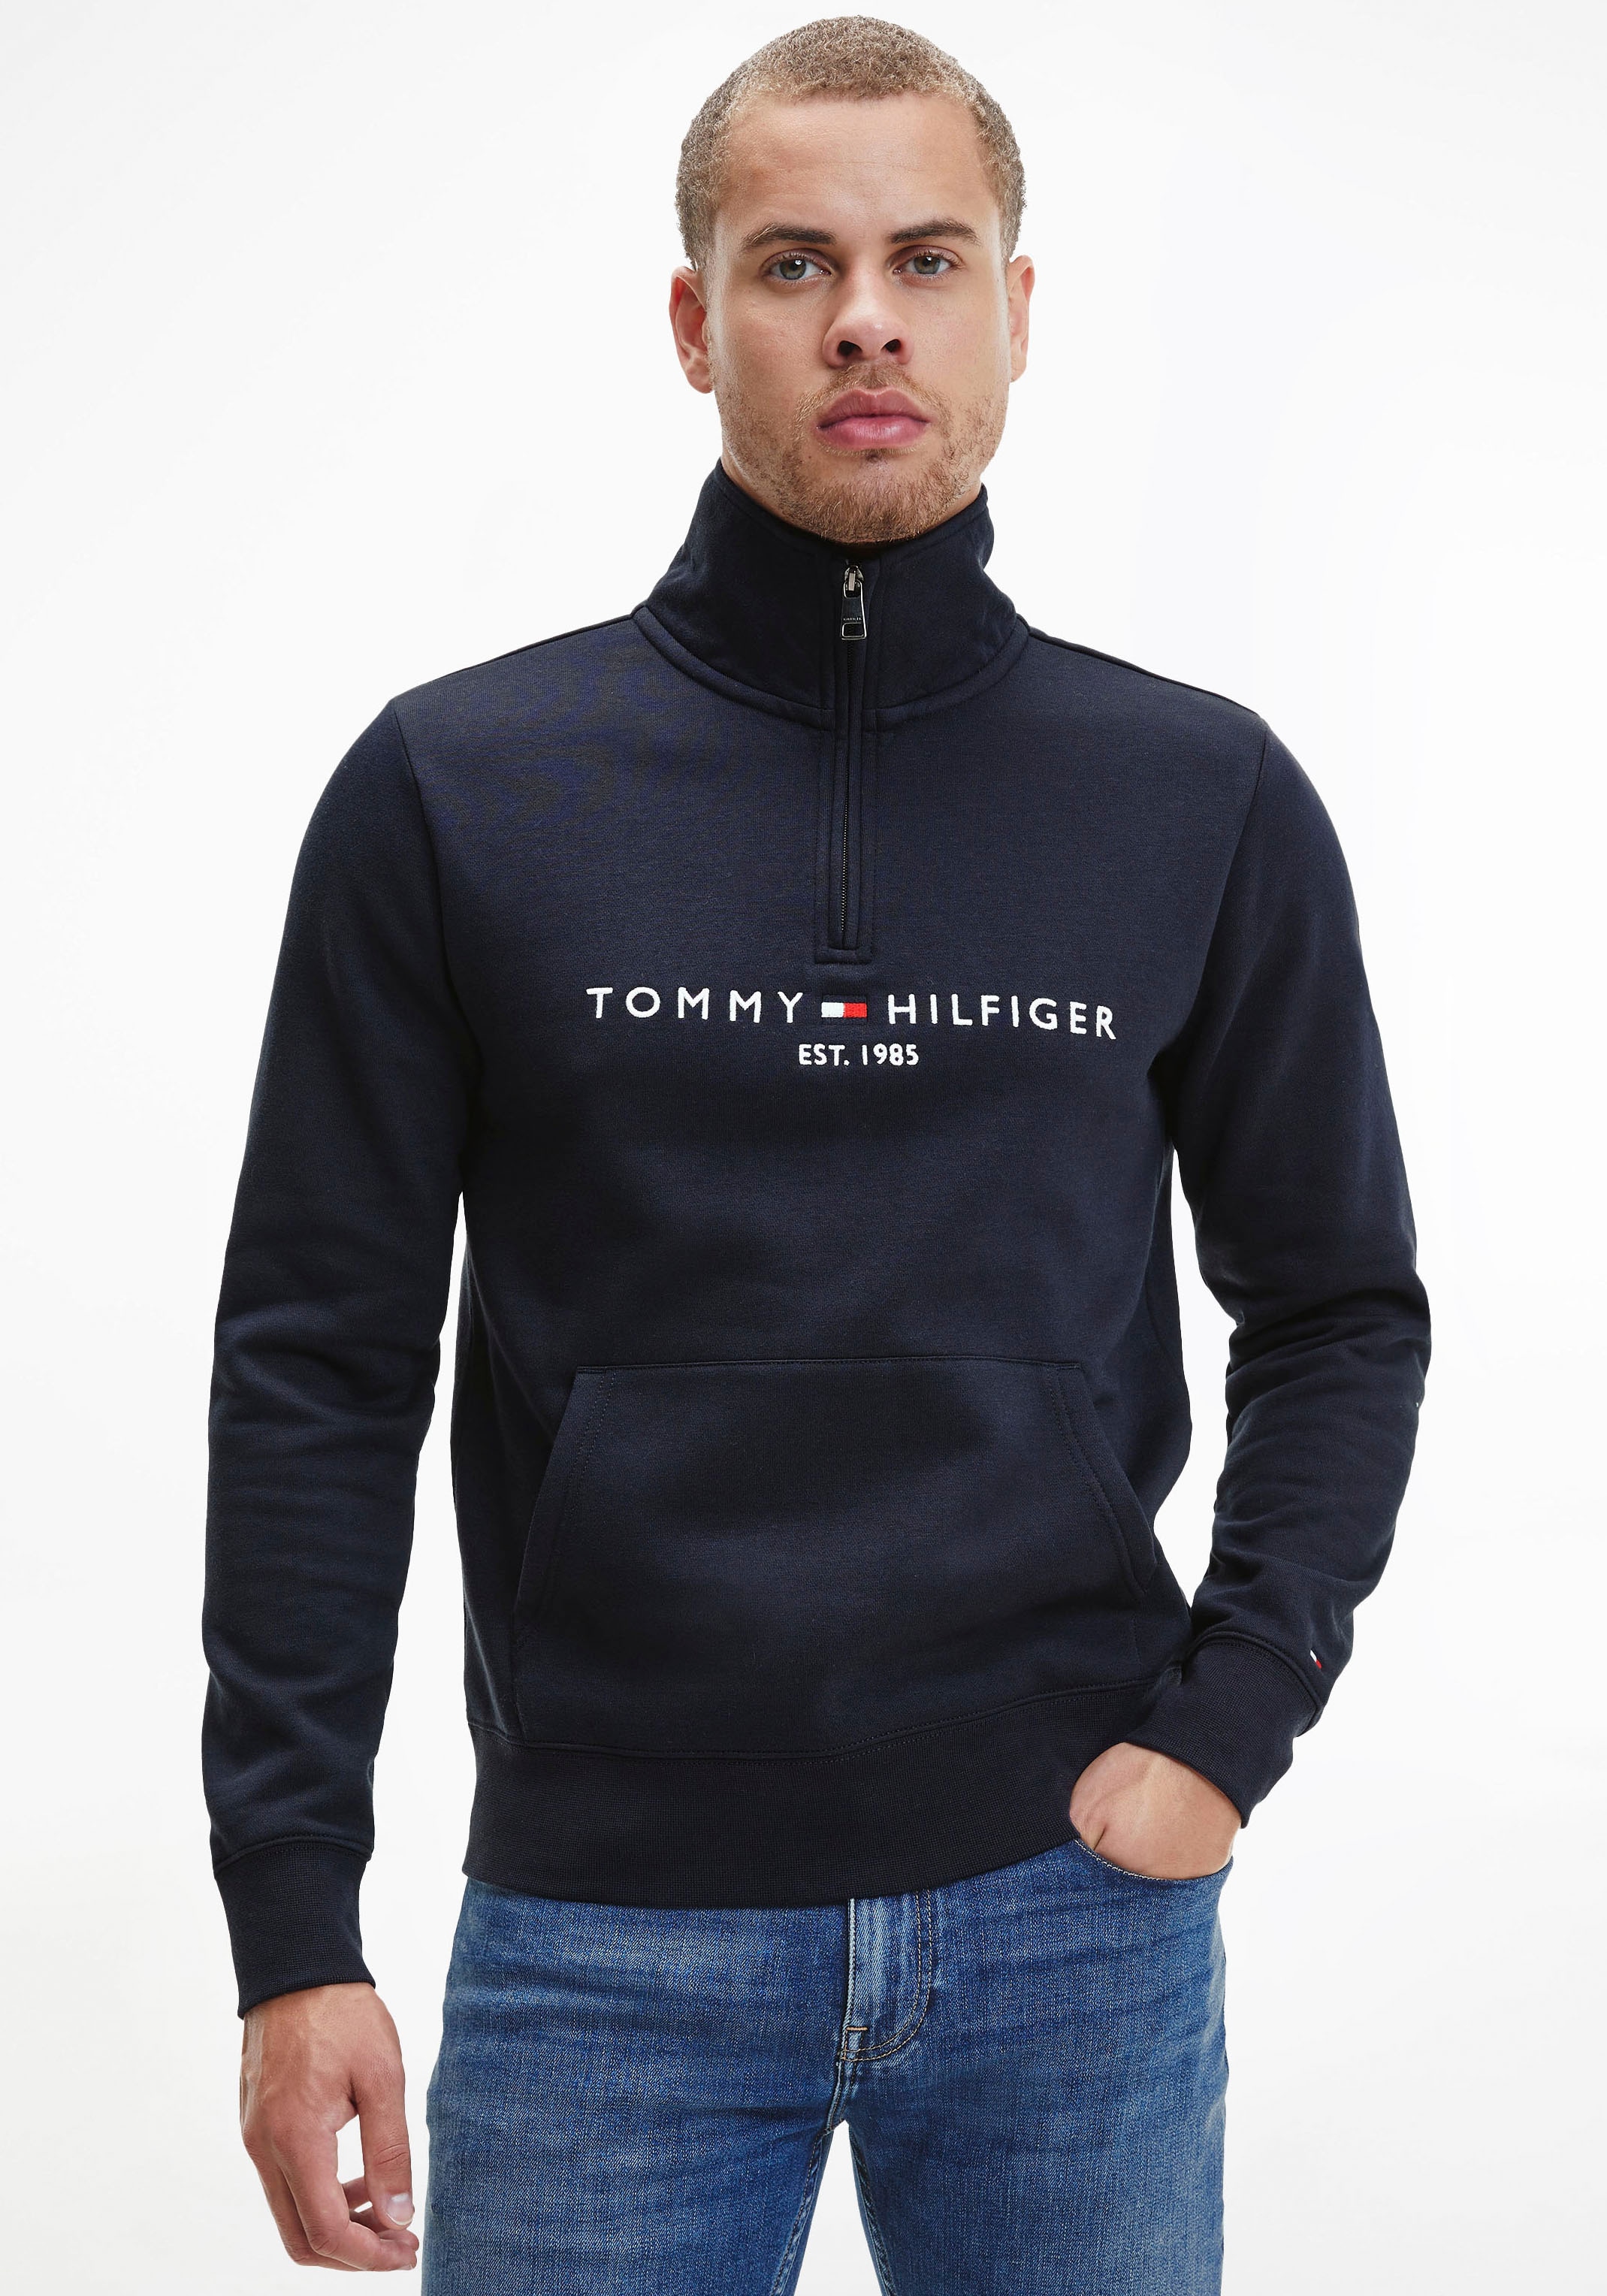 MOCKNECK« bei Hilfiger online Tommy LOGO Sweatshirt bestellen »TOMMY OTTO